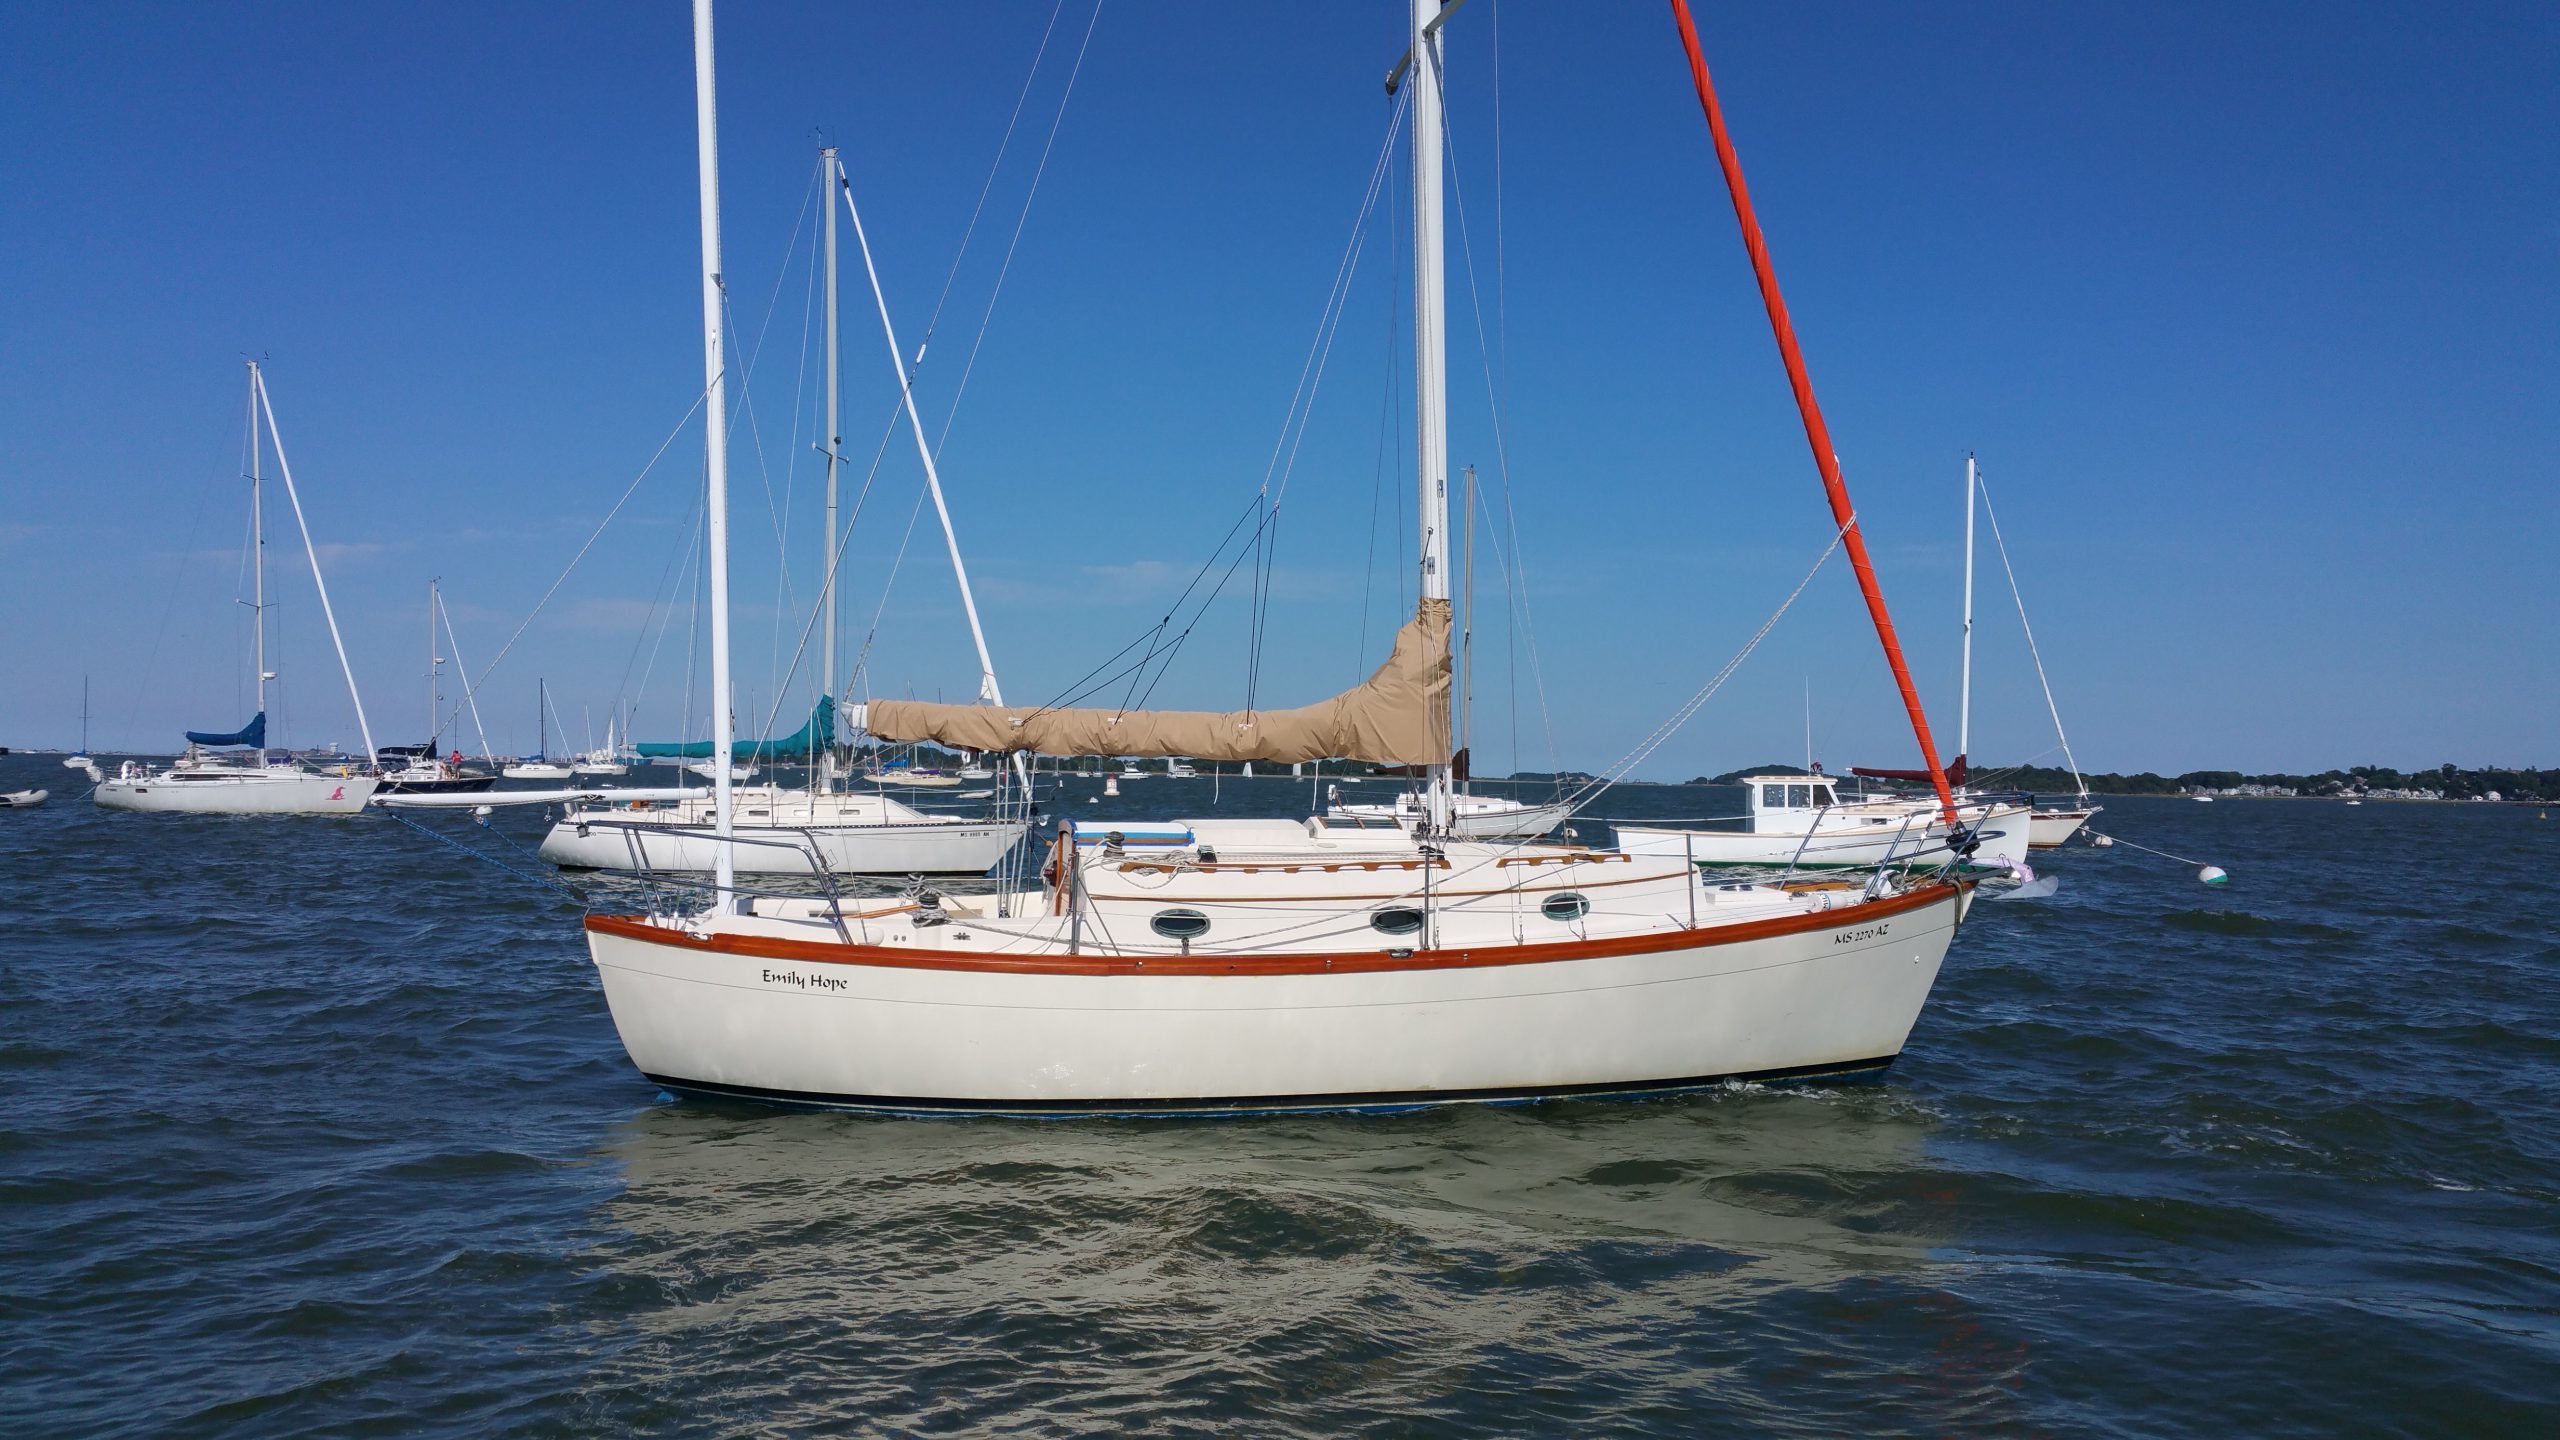 nimble 30 sailboat for sale